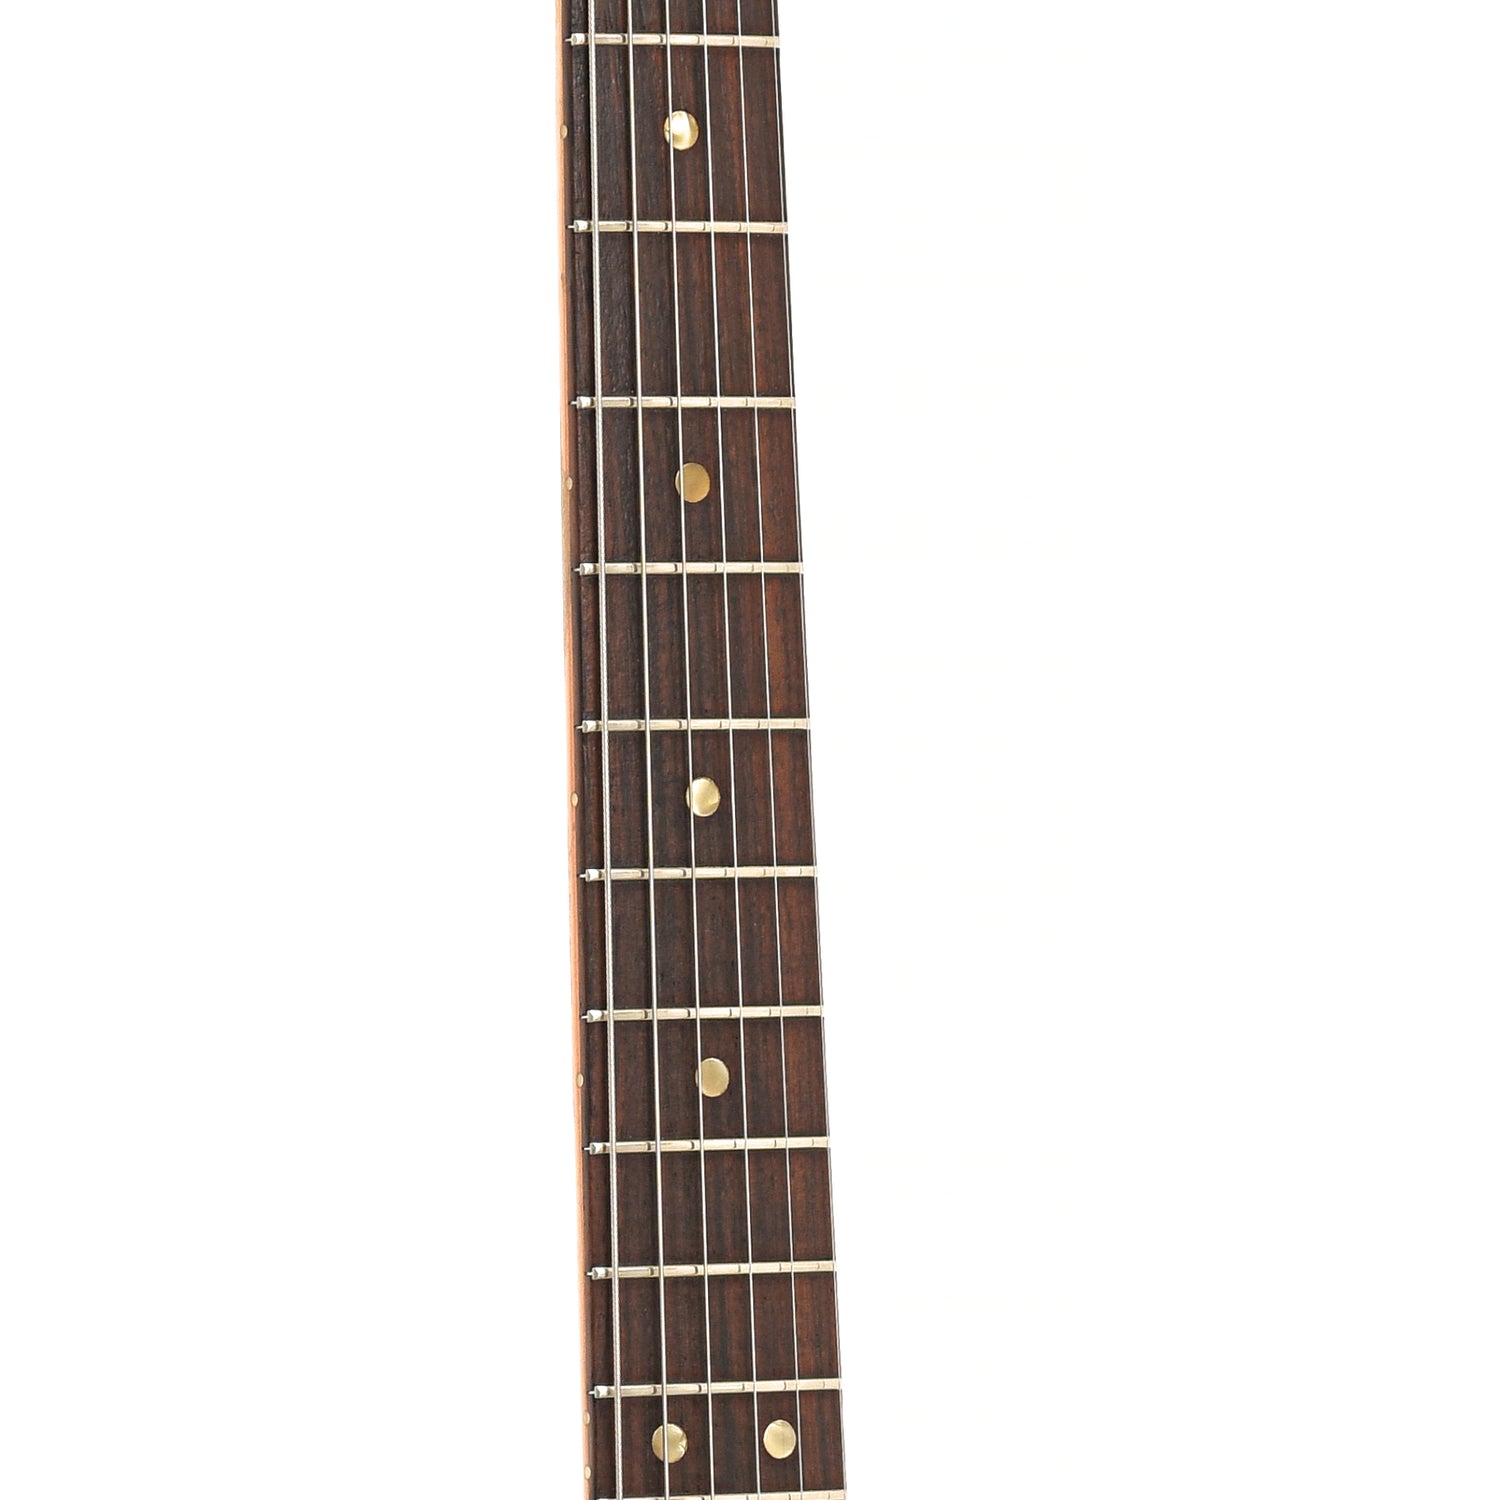 Fretboard of 1966 Fender Stratocaster